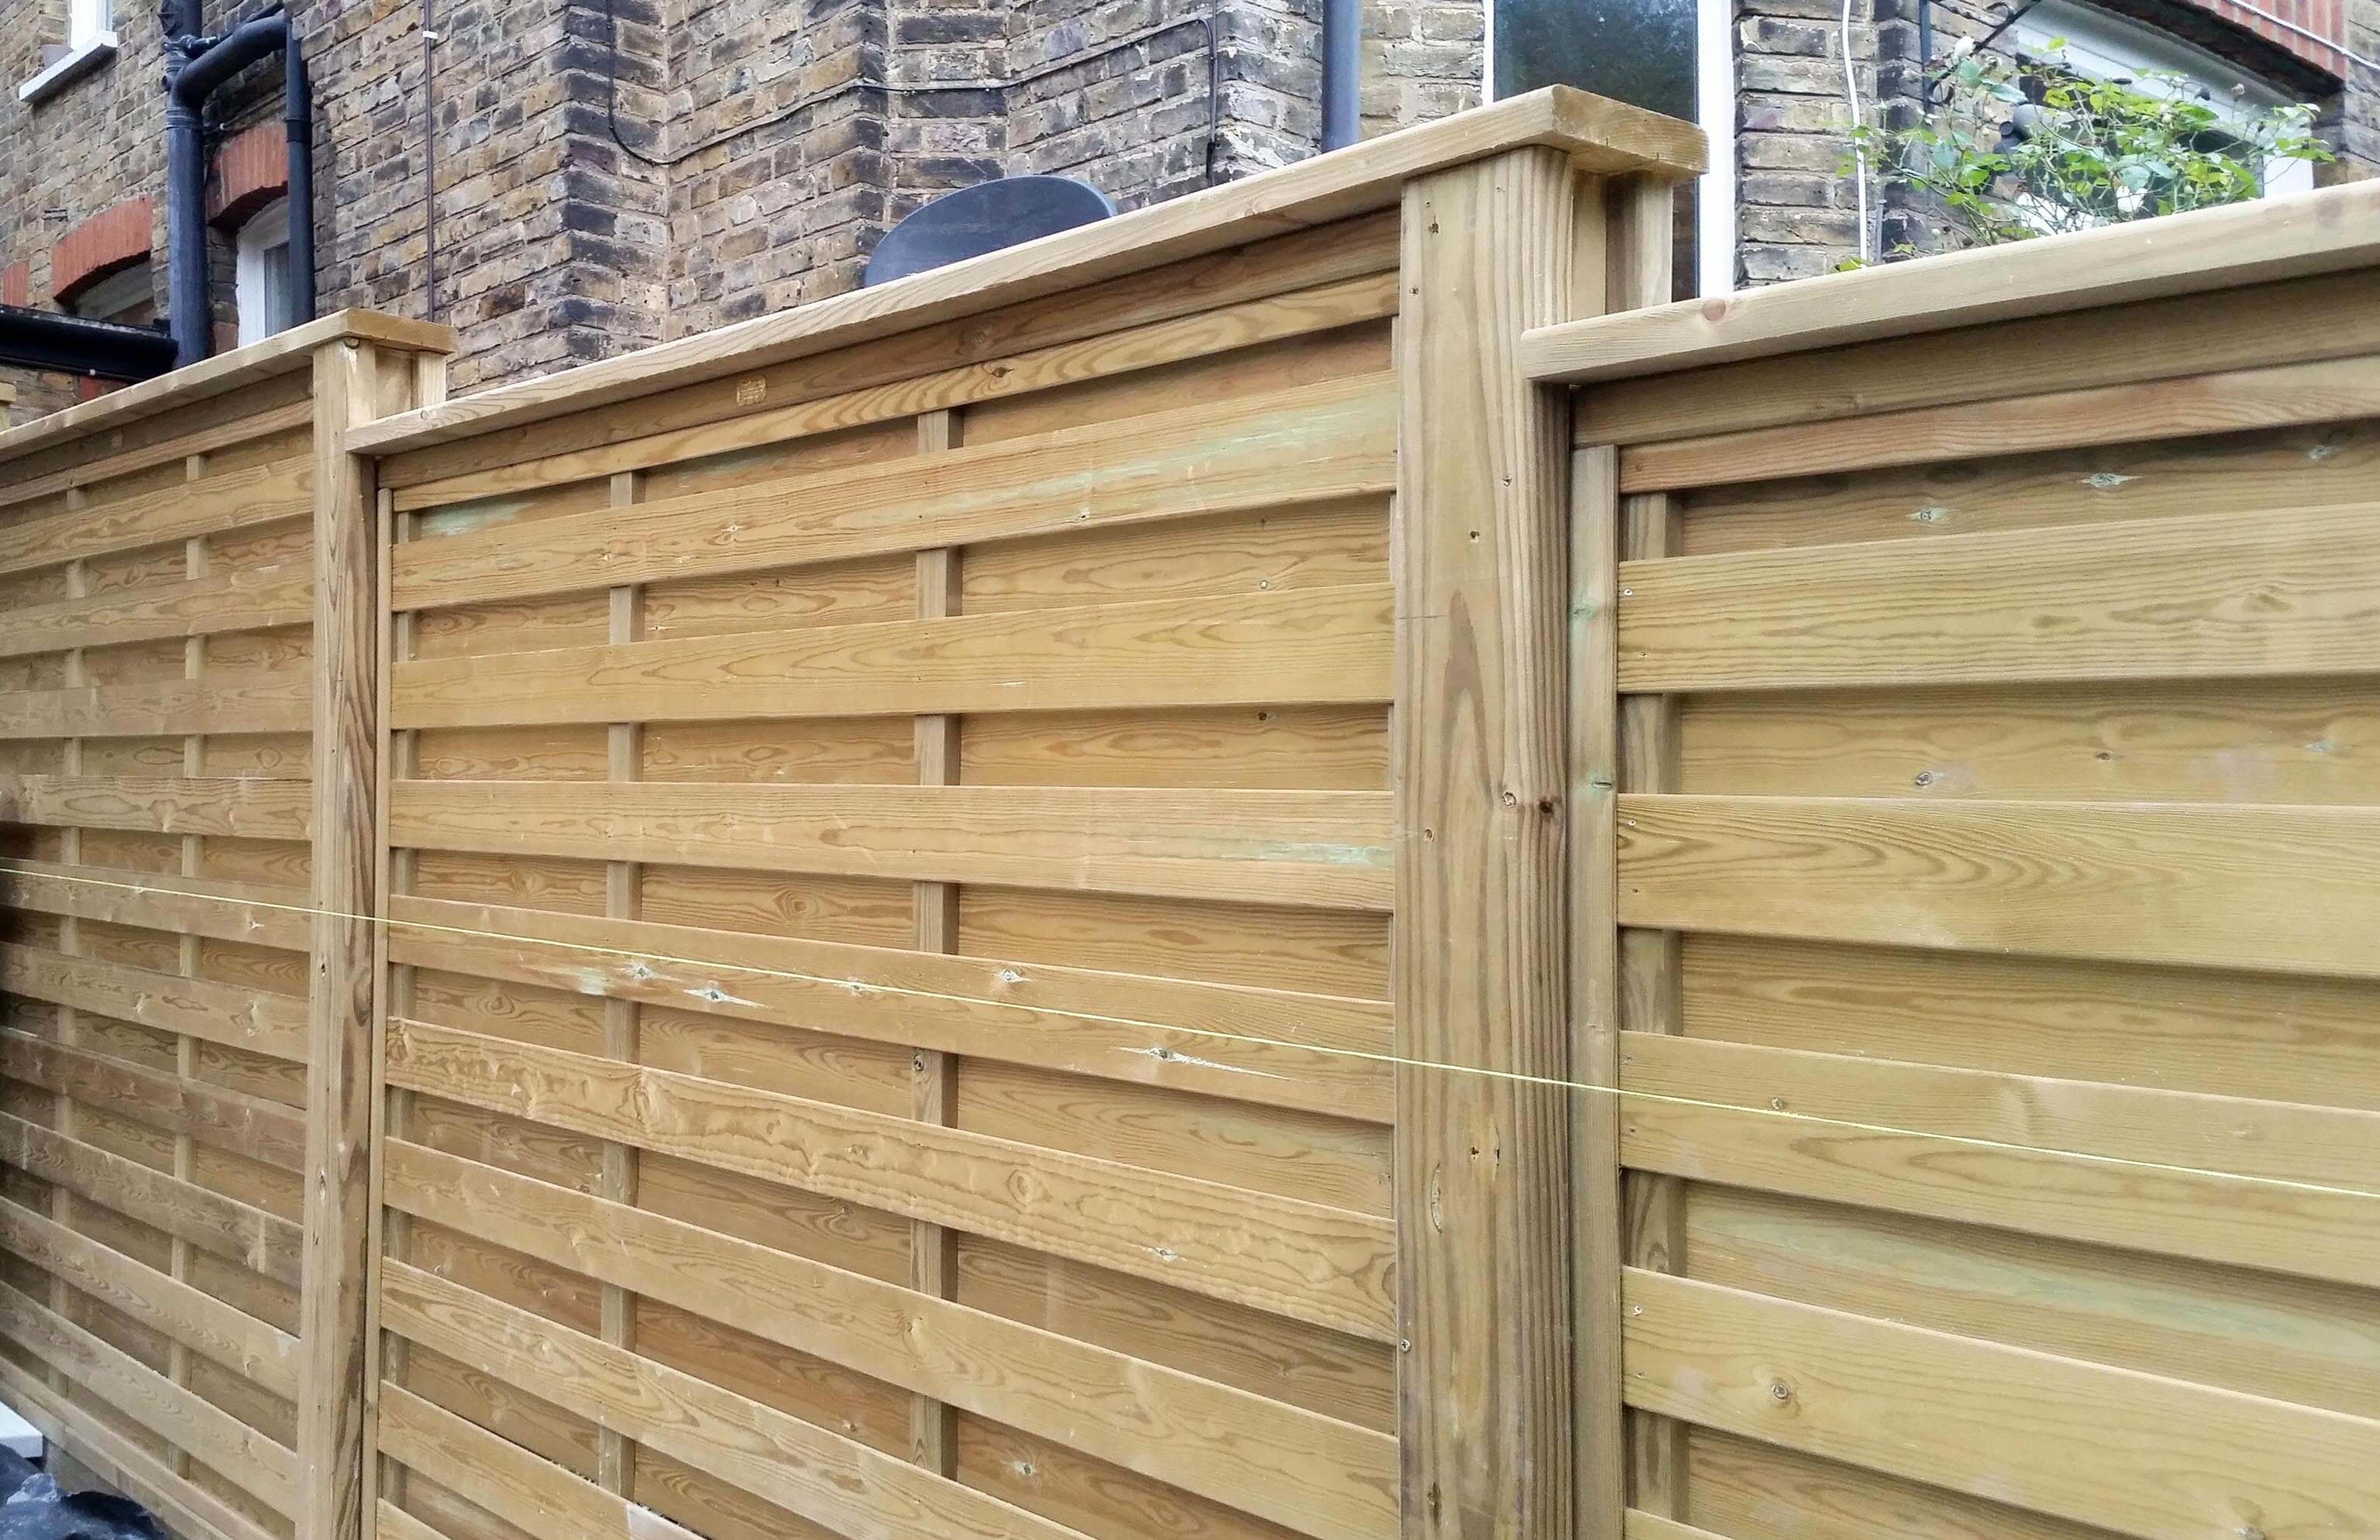 Newly installed Hit Miss horizontal slatted fence panels